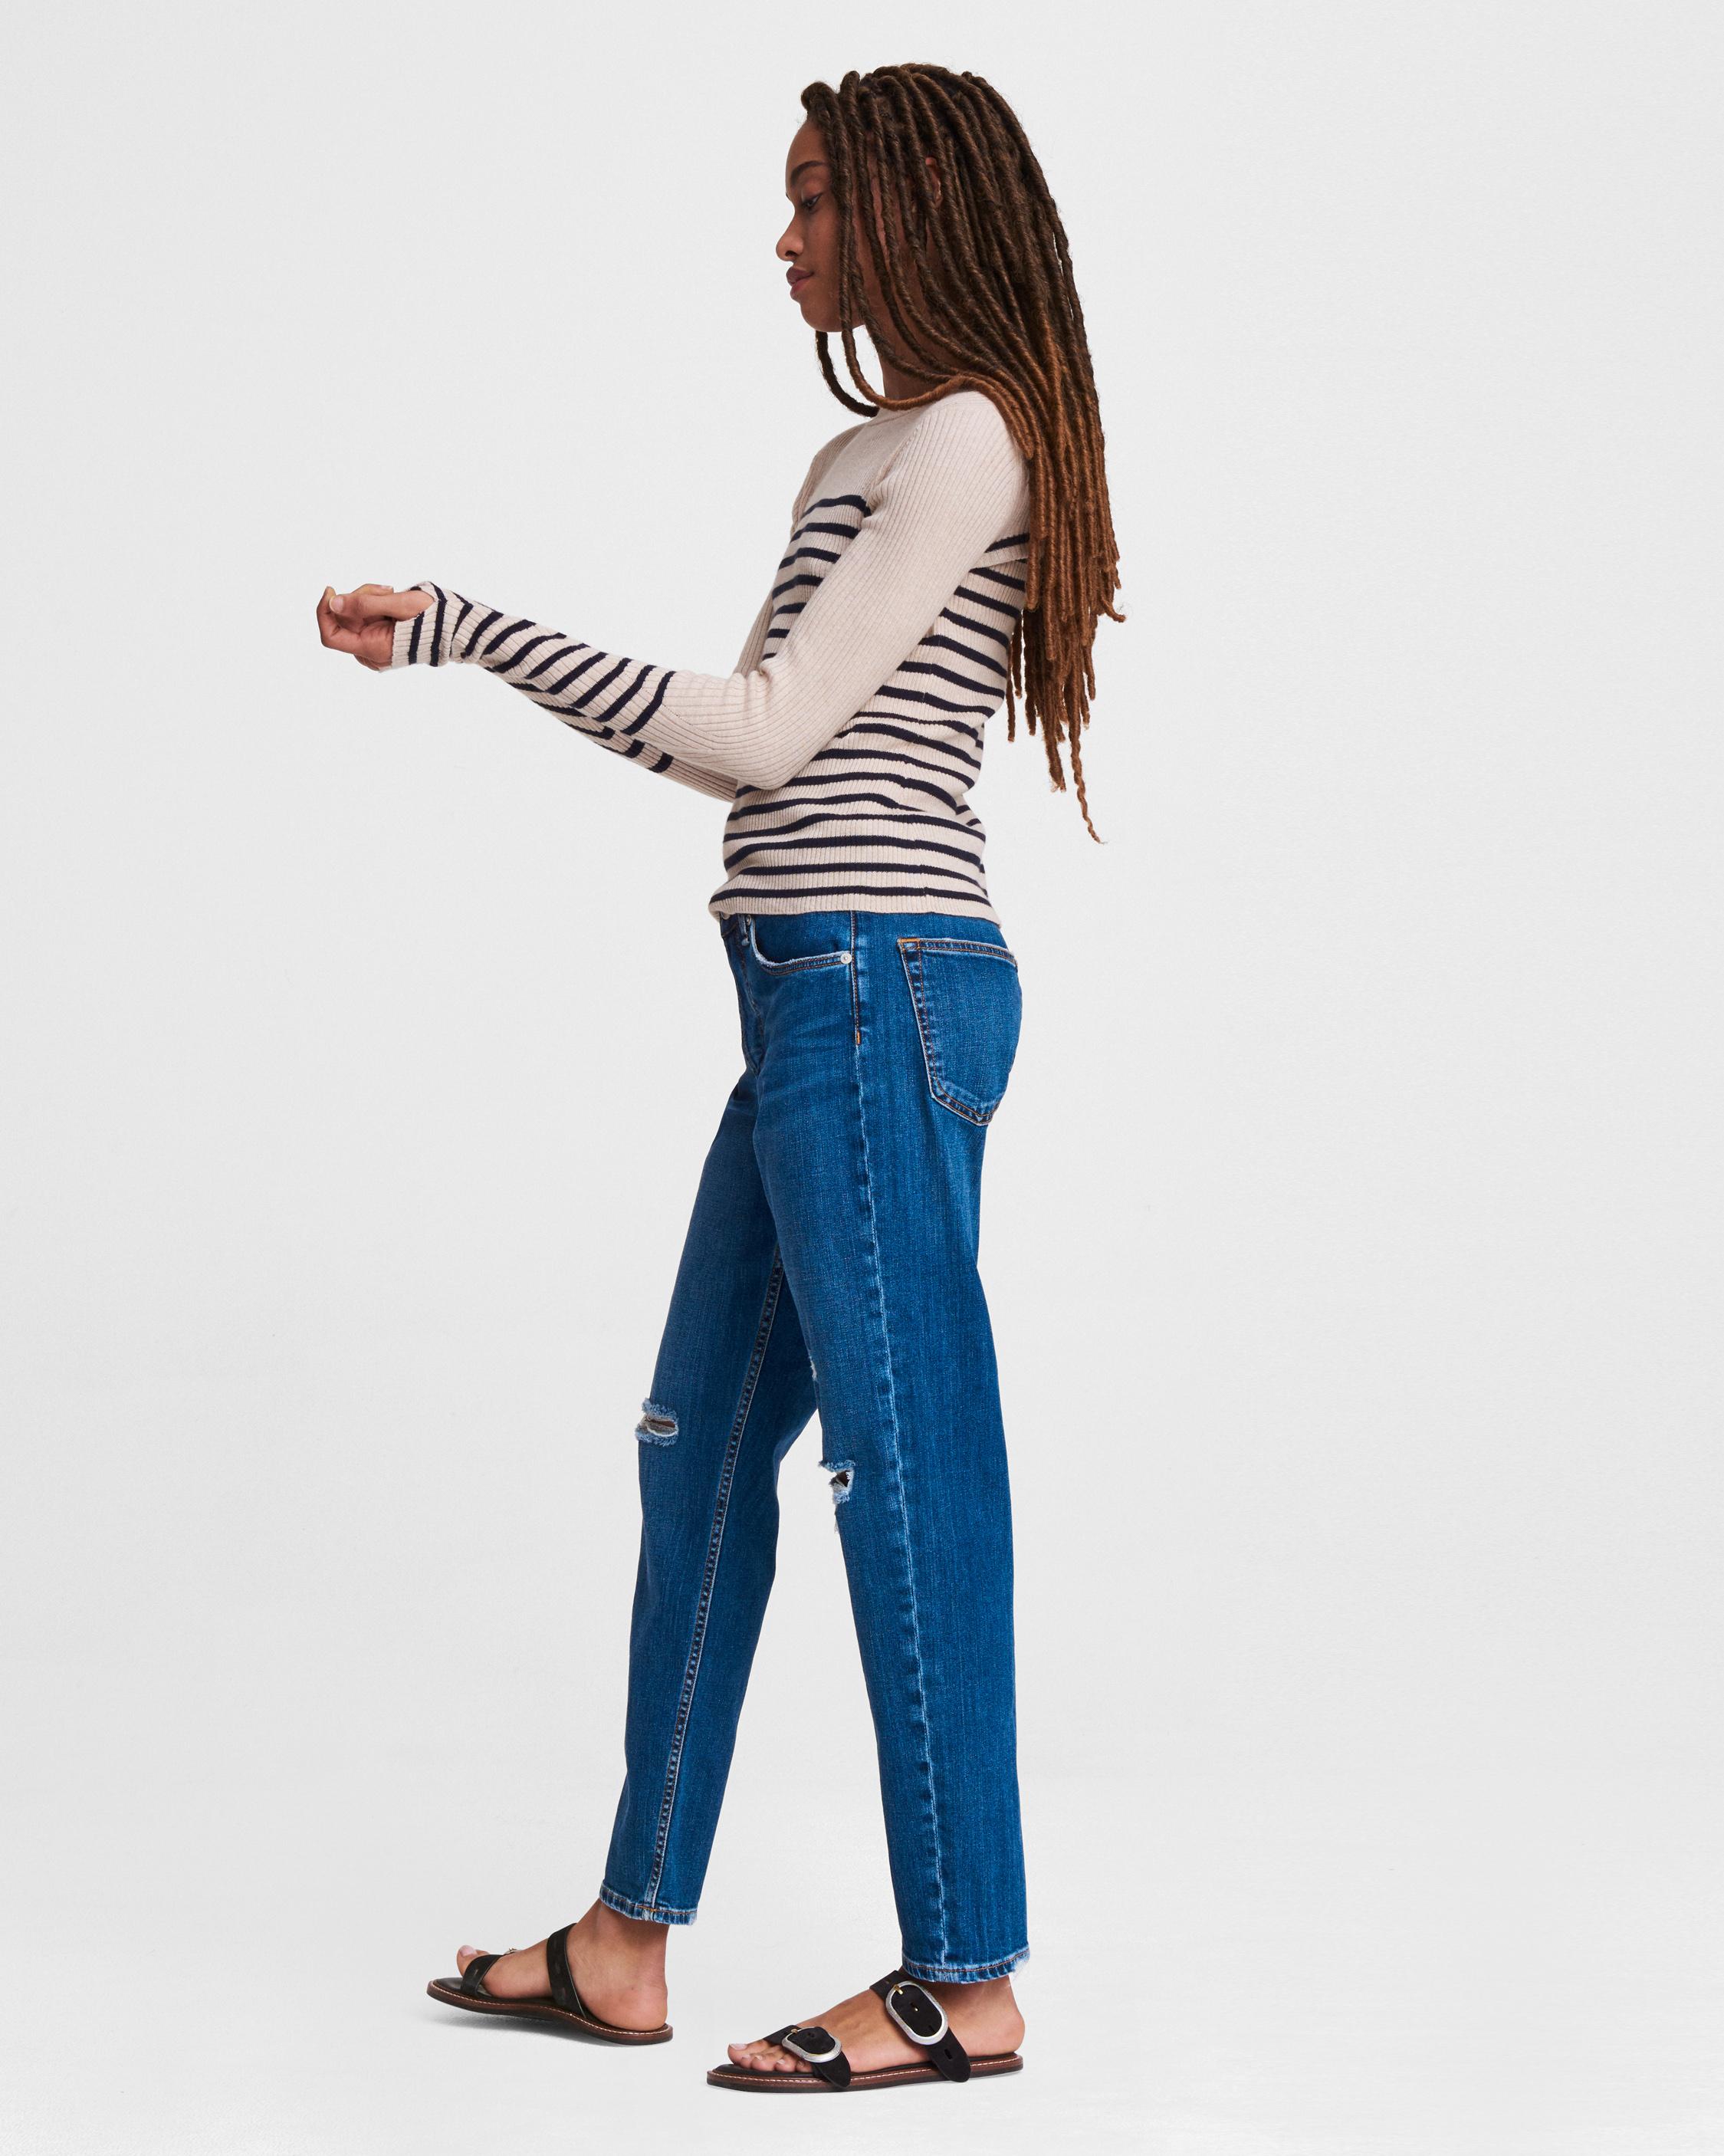 Kate Striped Cotton Cashmere Long Sleeve - Wheat Combo | rag u0026 bone